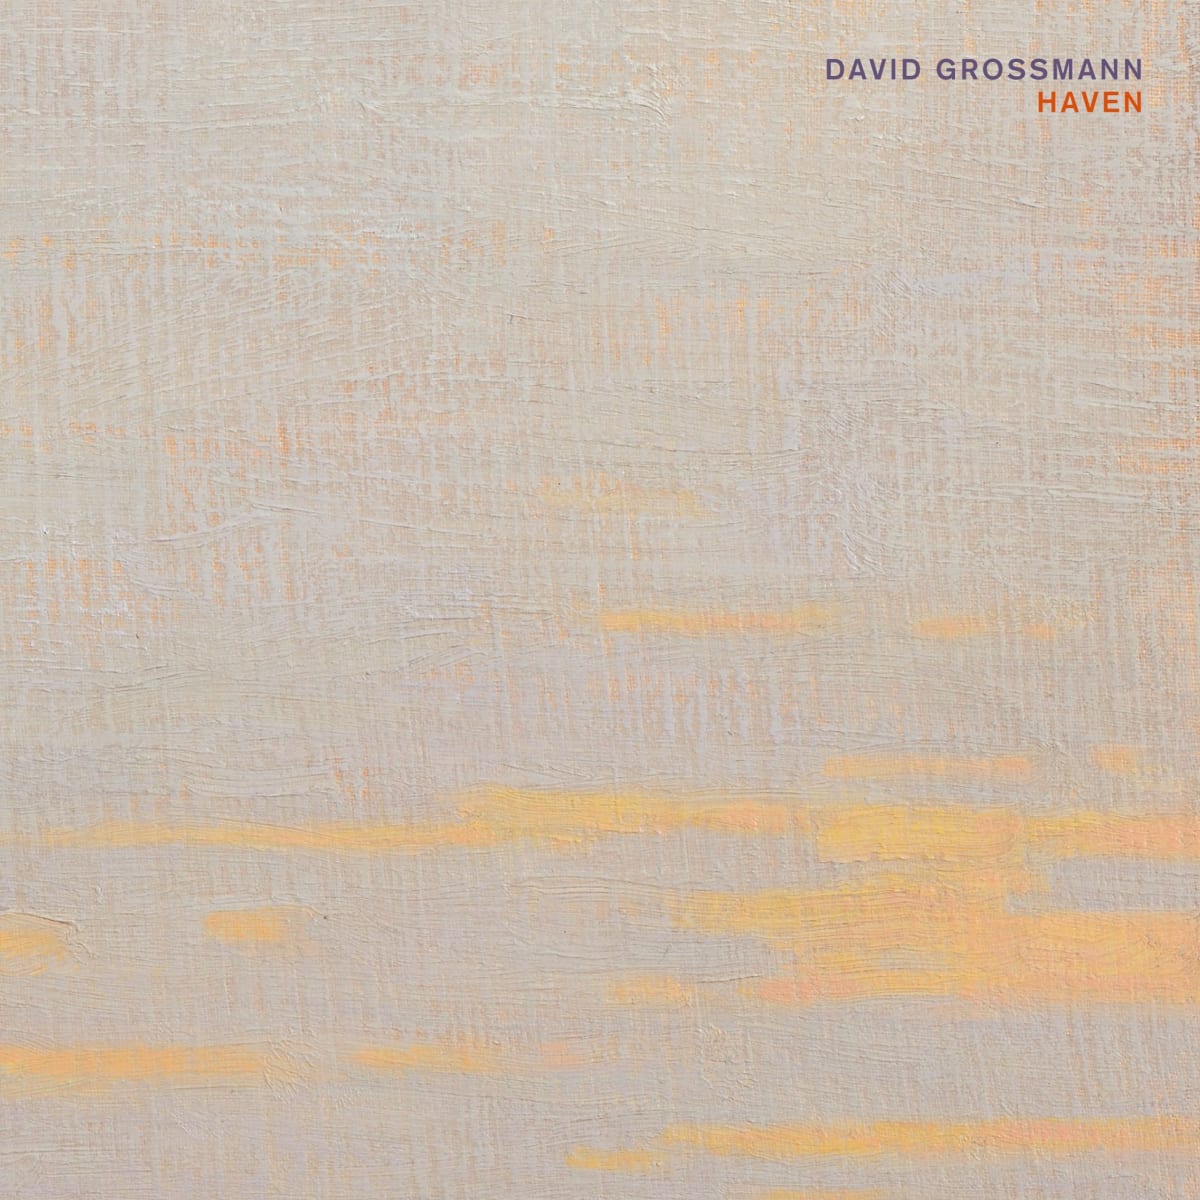 David Grossmann: Haven